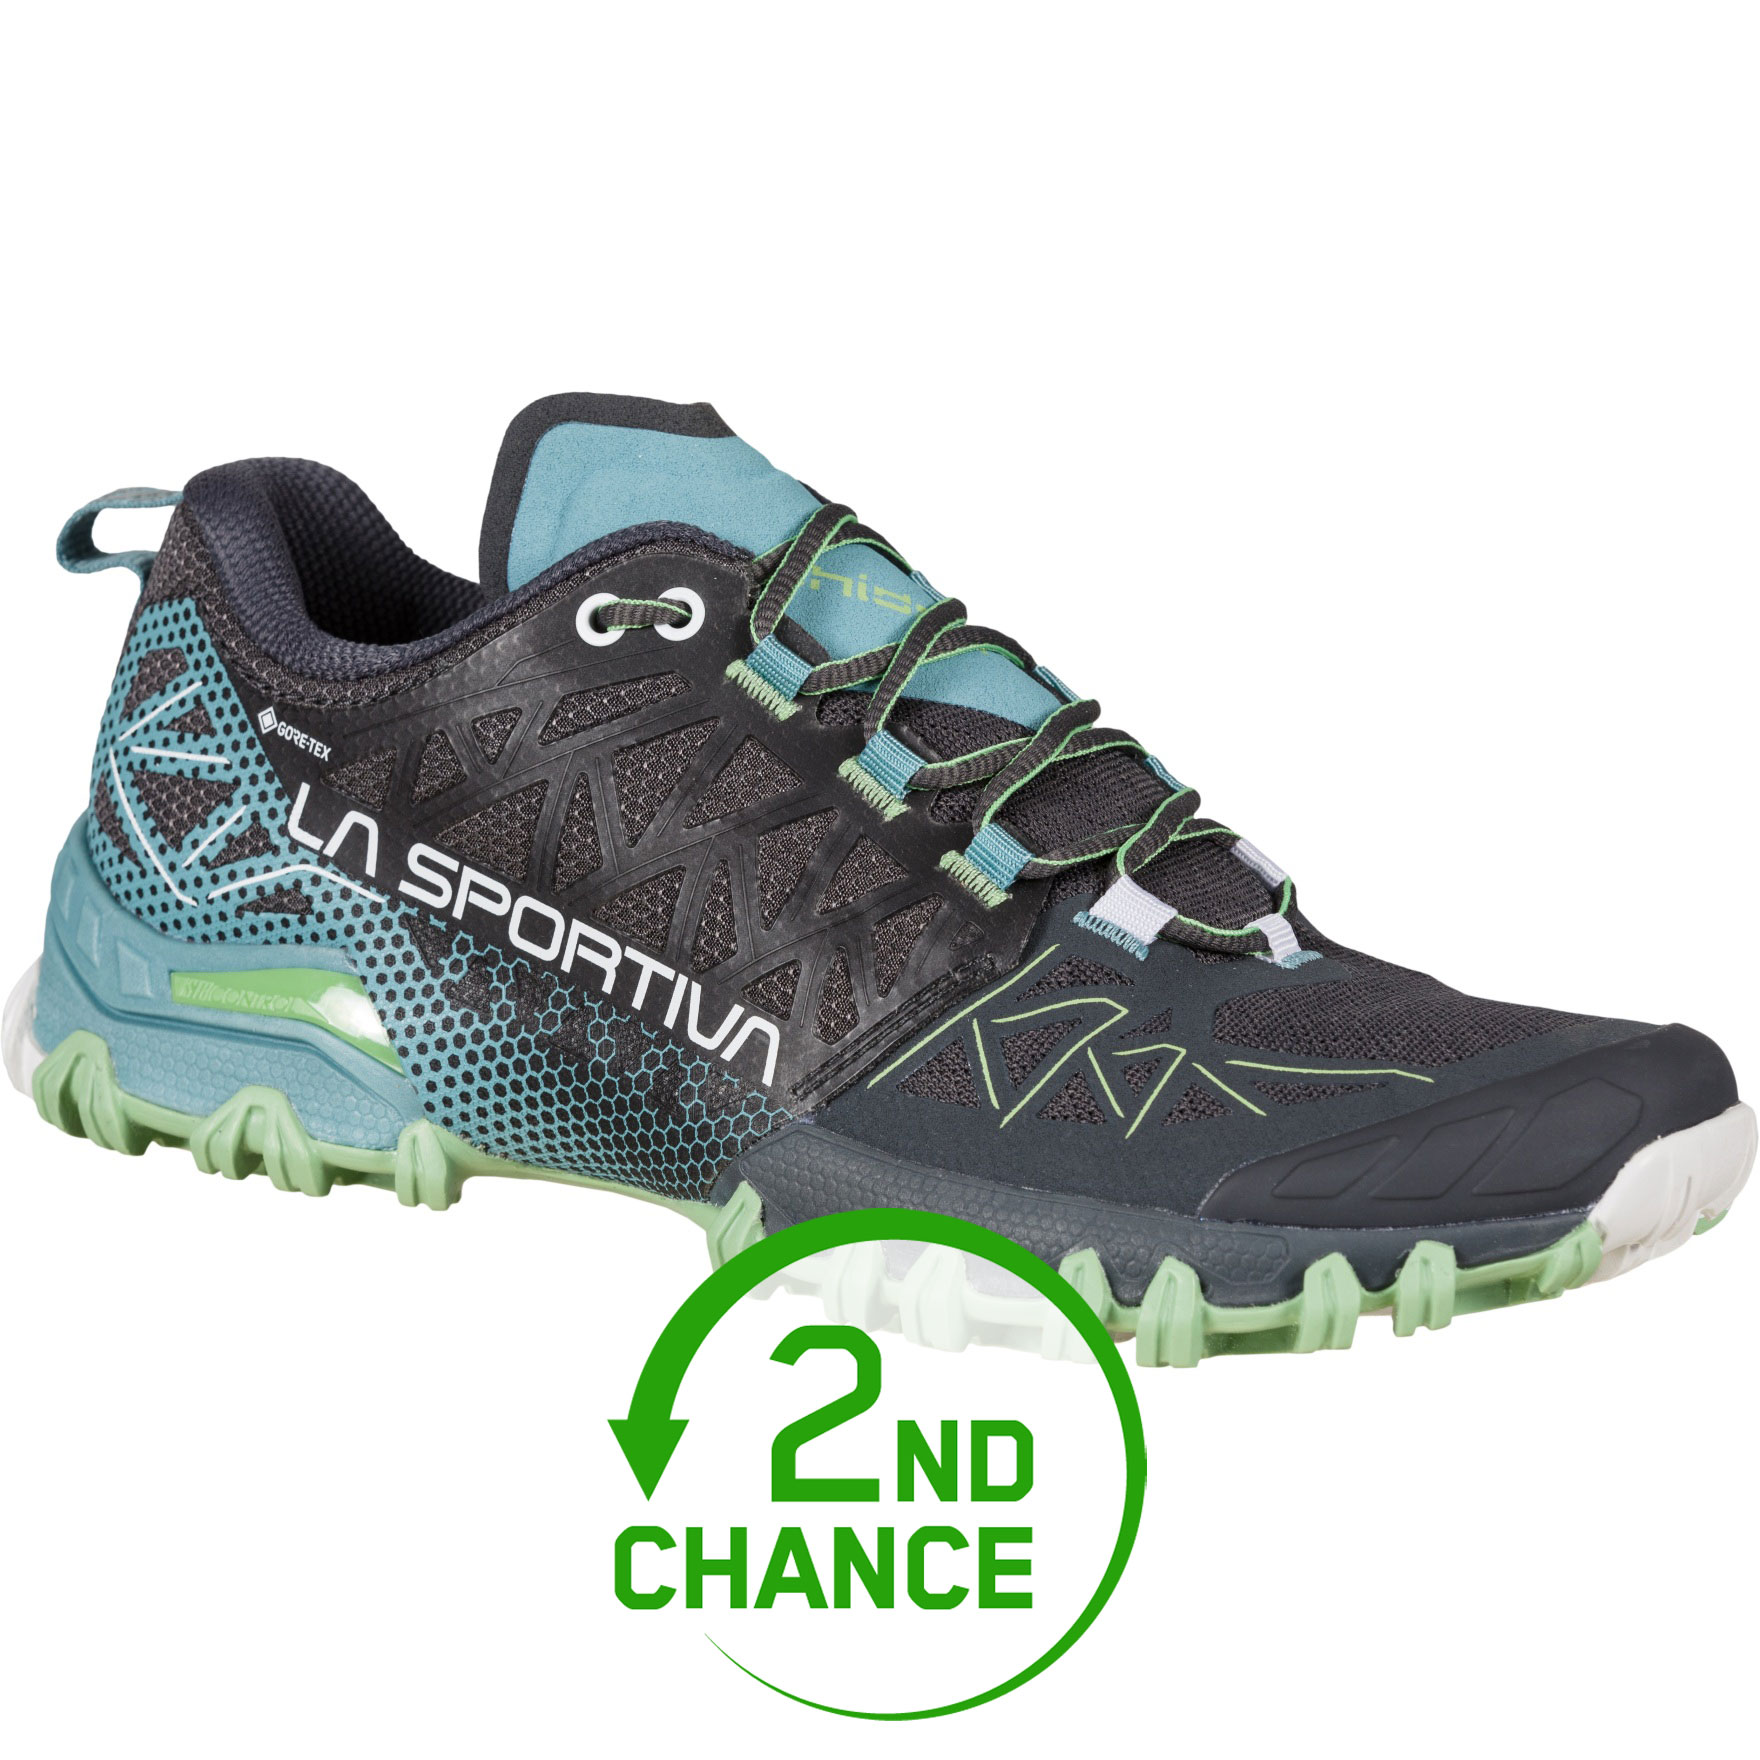 Picture of La Sportiva Bushido II GTX Running Shoes Women - Carbon/Mist - 2nd Choice